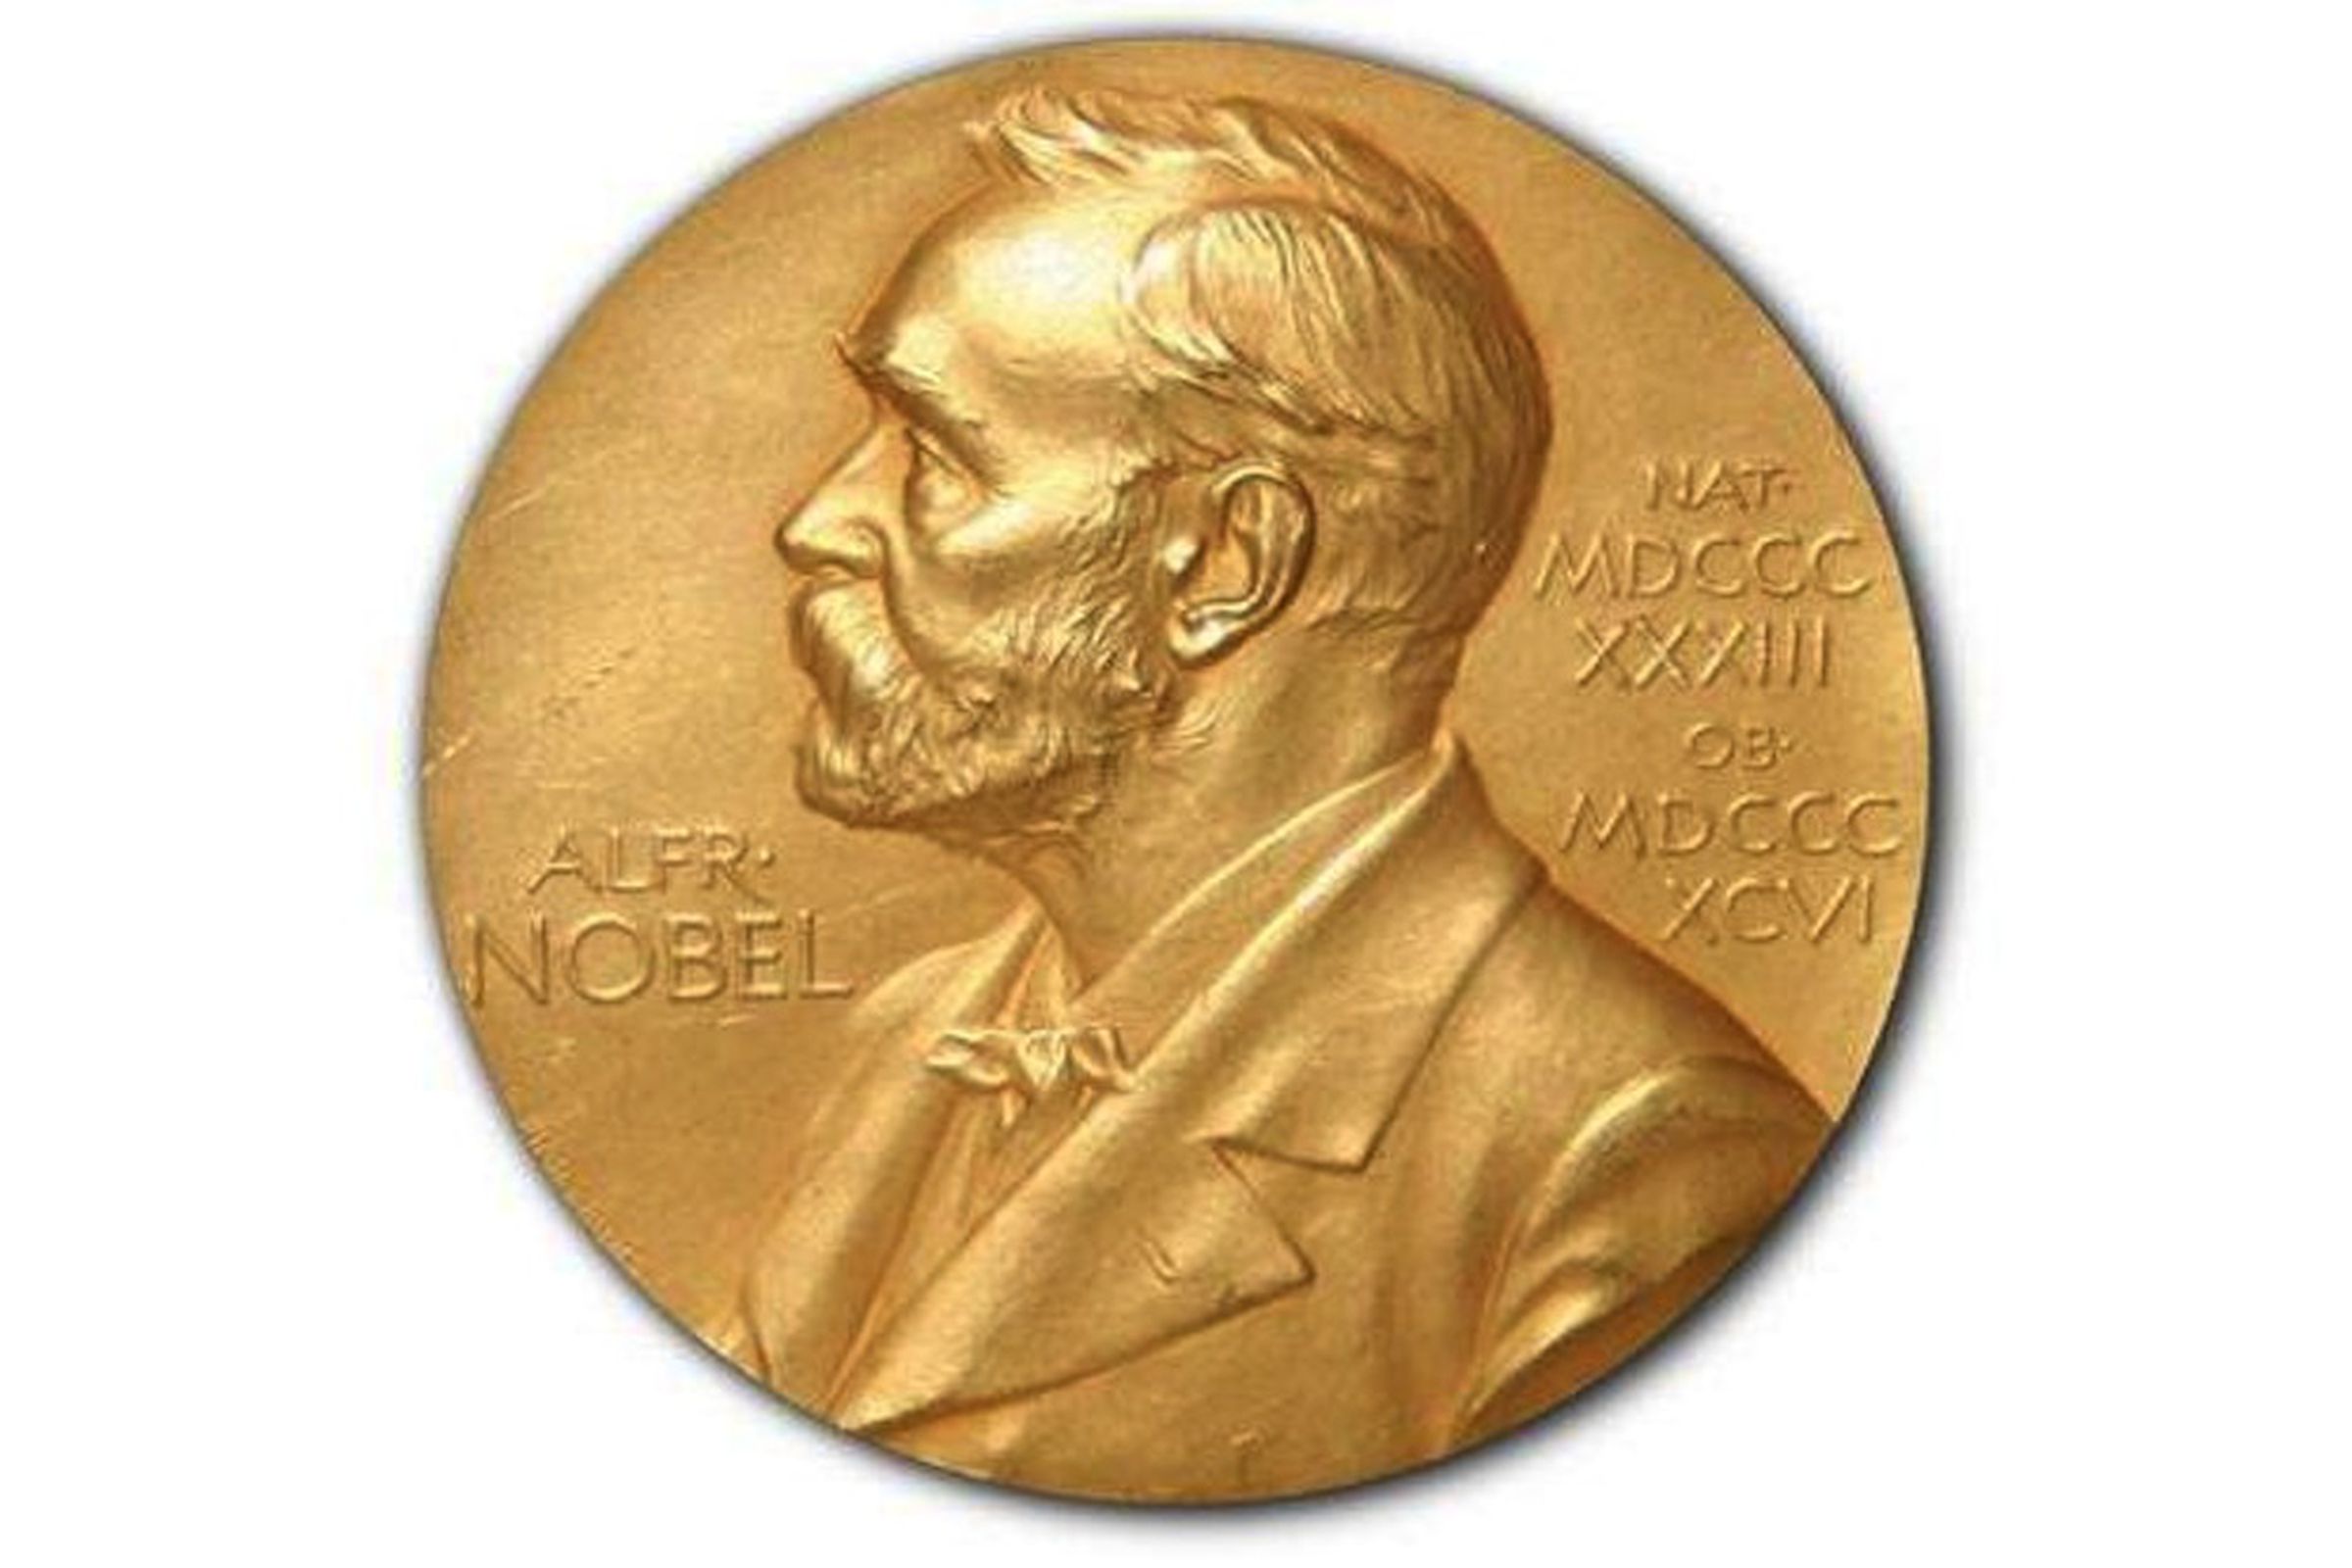 Nobel Medicine Prize